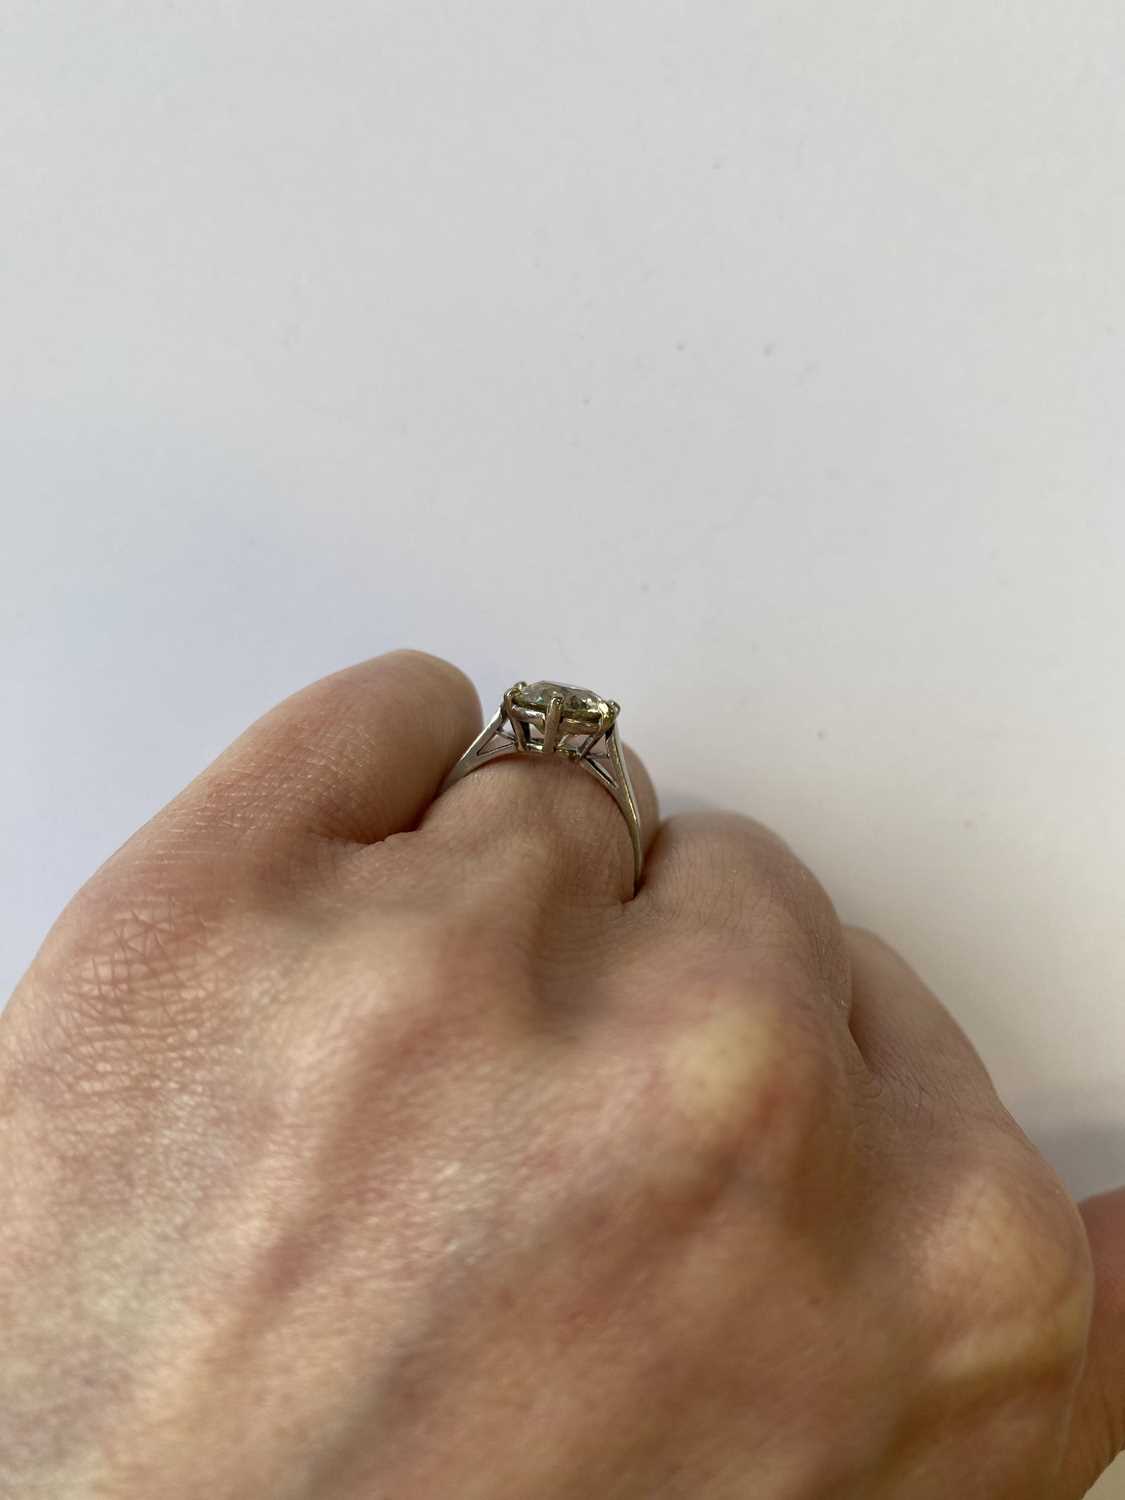 An early 20th century single stone diamond ring - Image 10 of 14